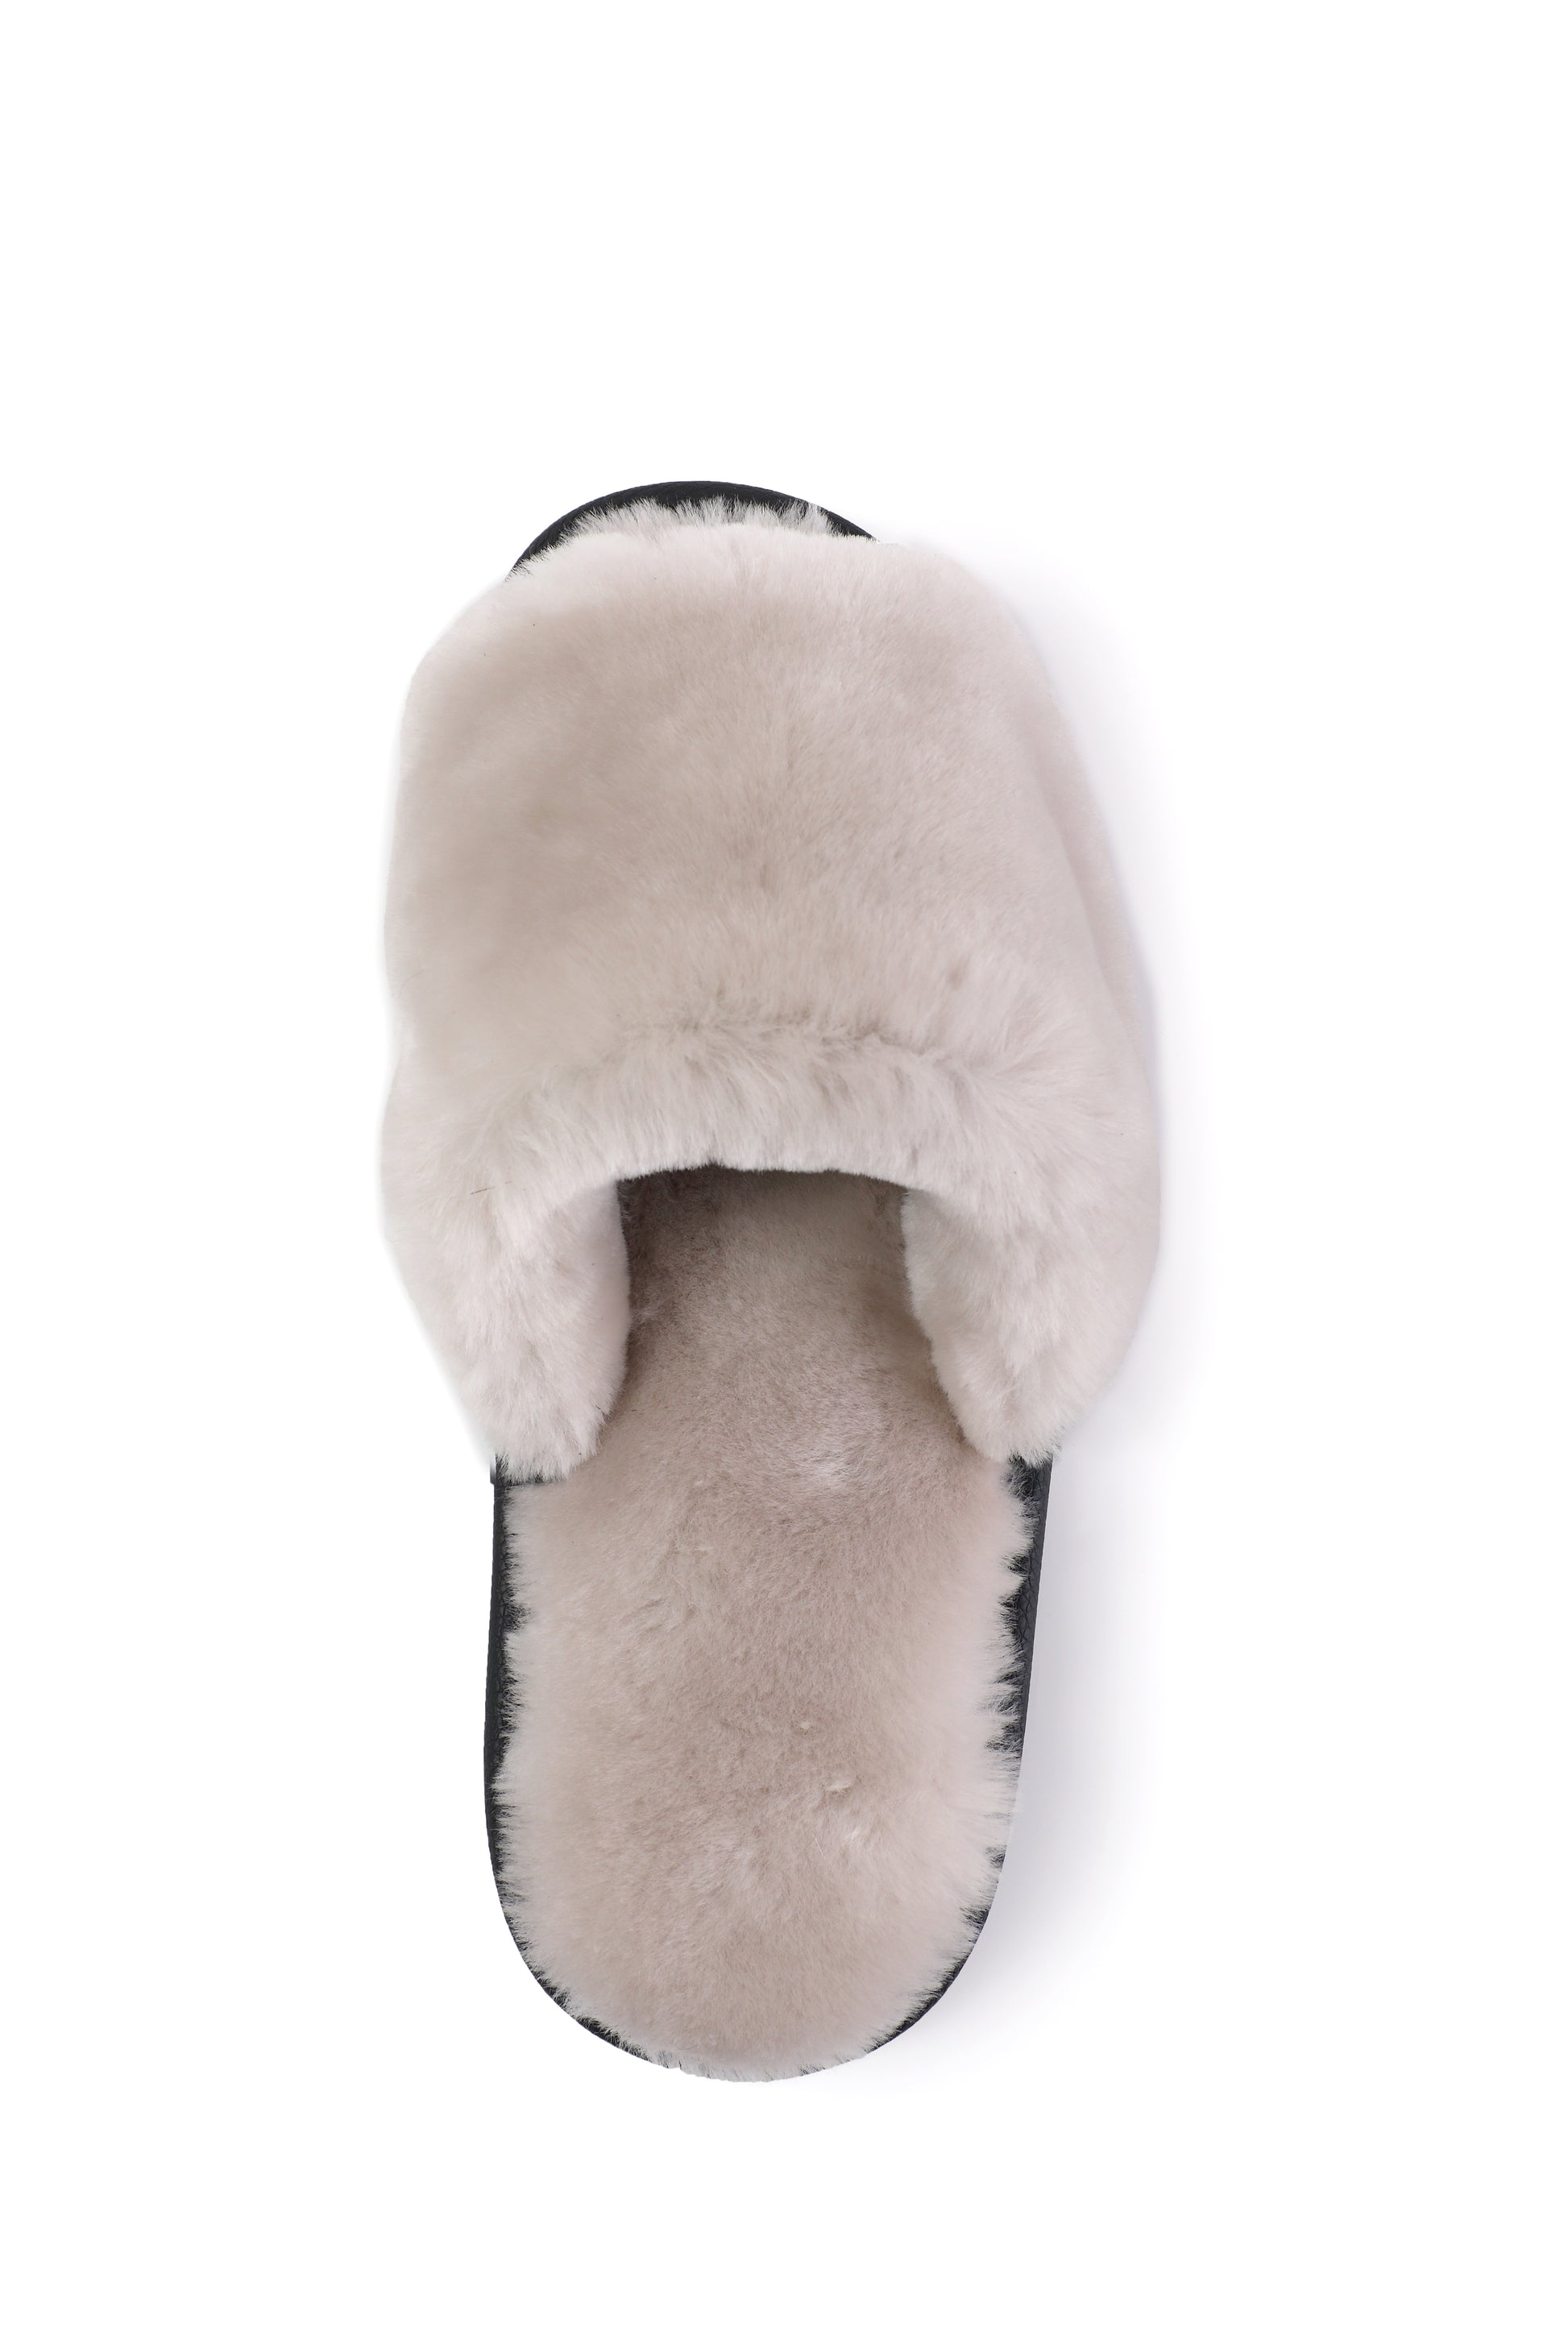 Soft Open Toe Sheepskin Mule Slippers for Women with Fur Lining in Beige Color